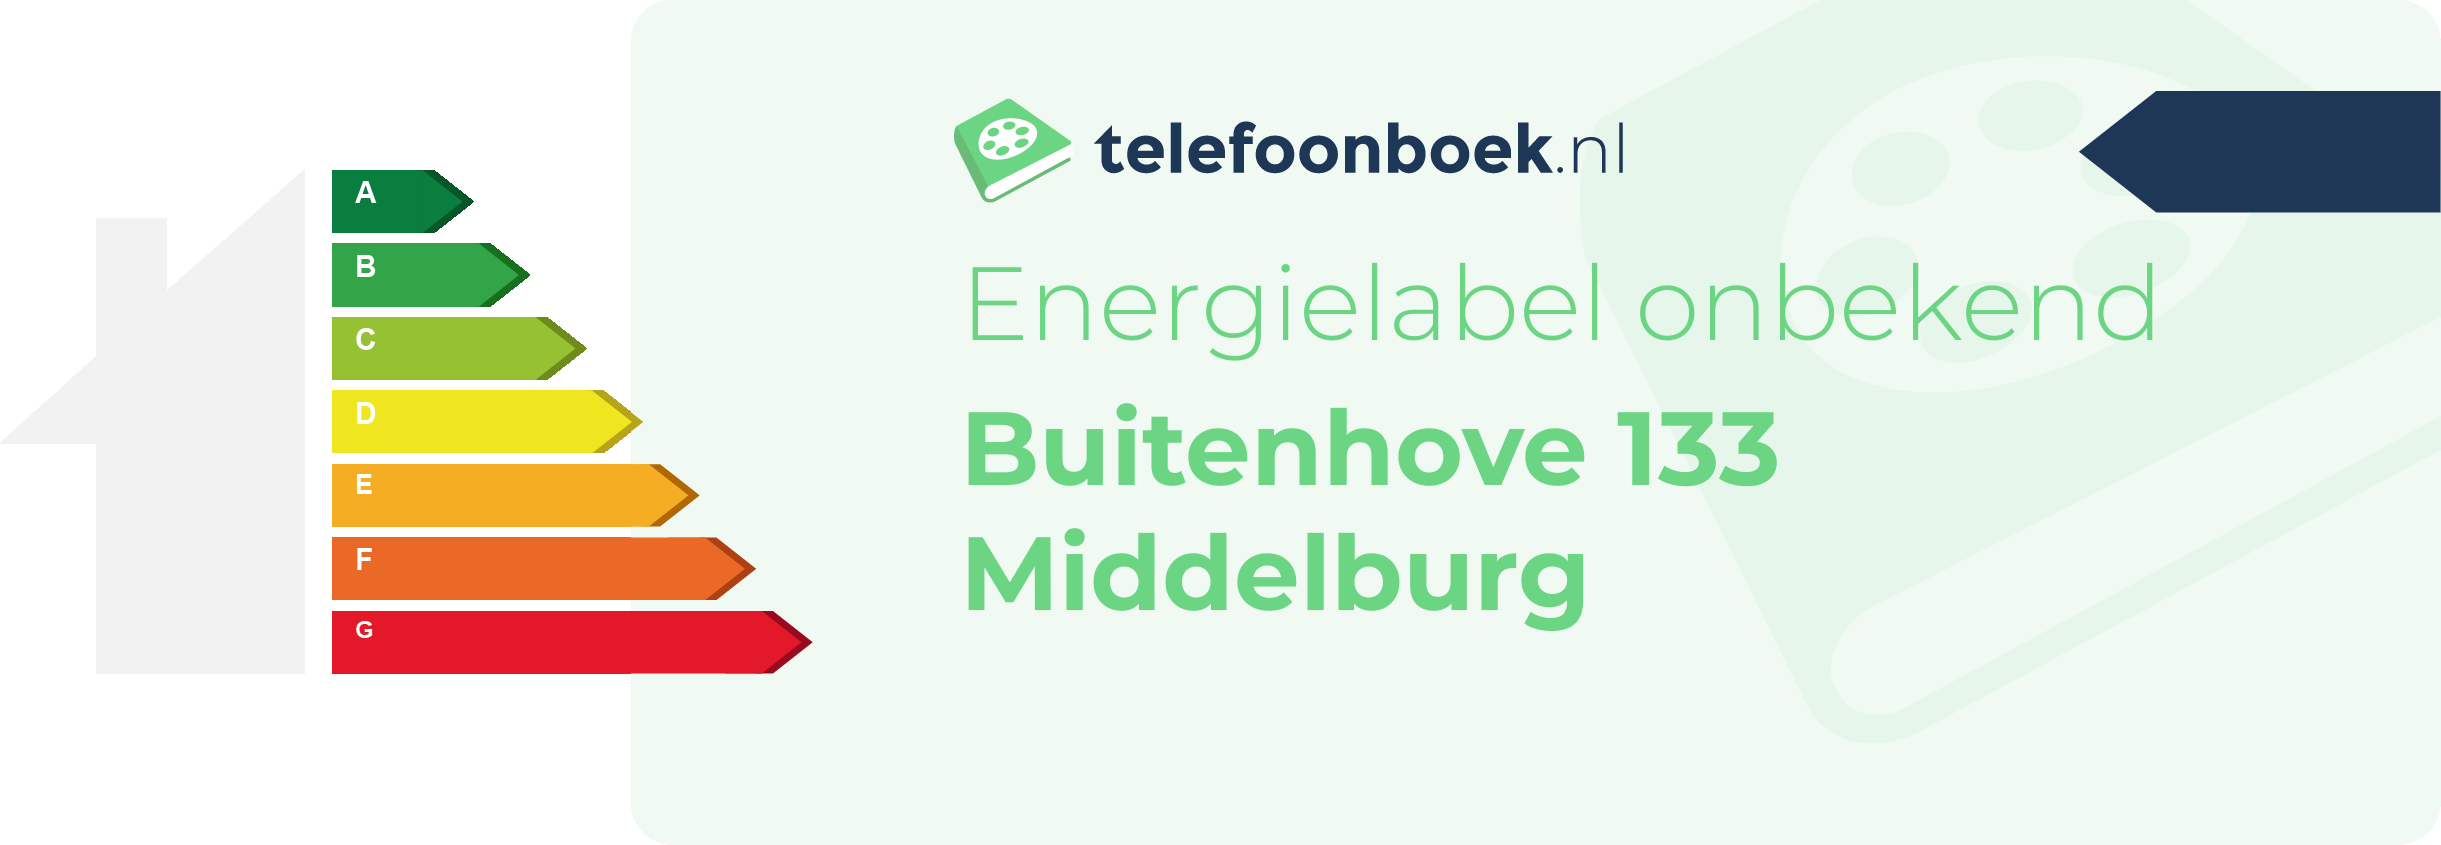 Energielabel Buitenhove 133 Middelburg